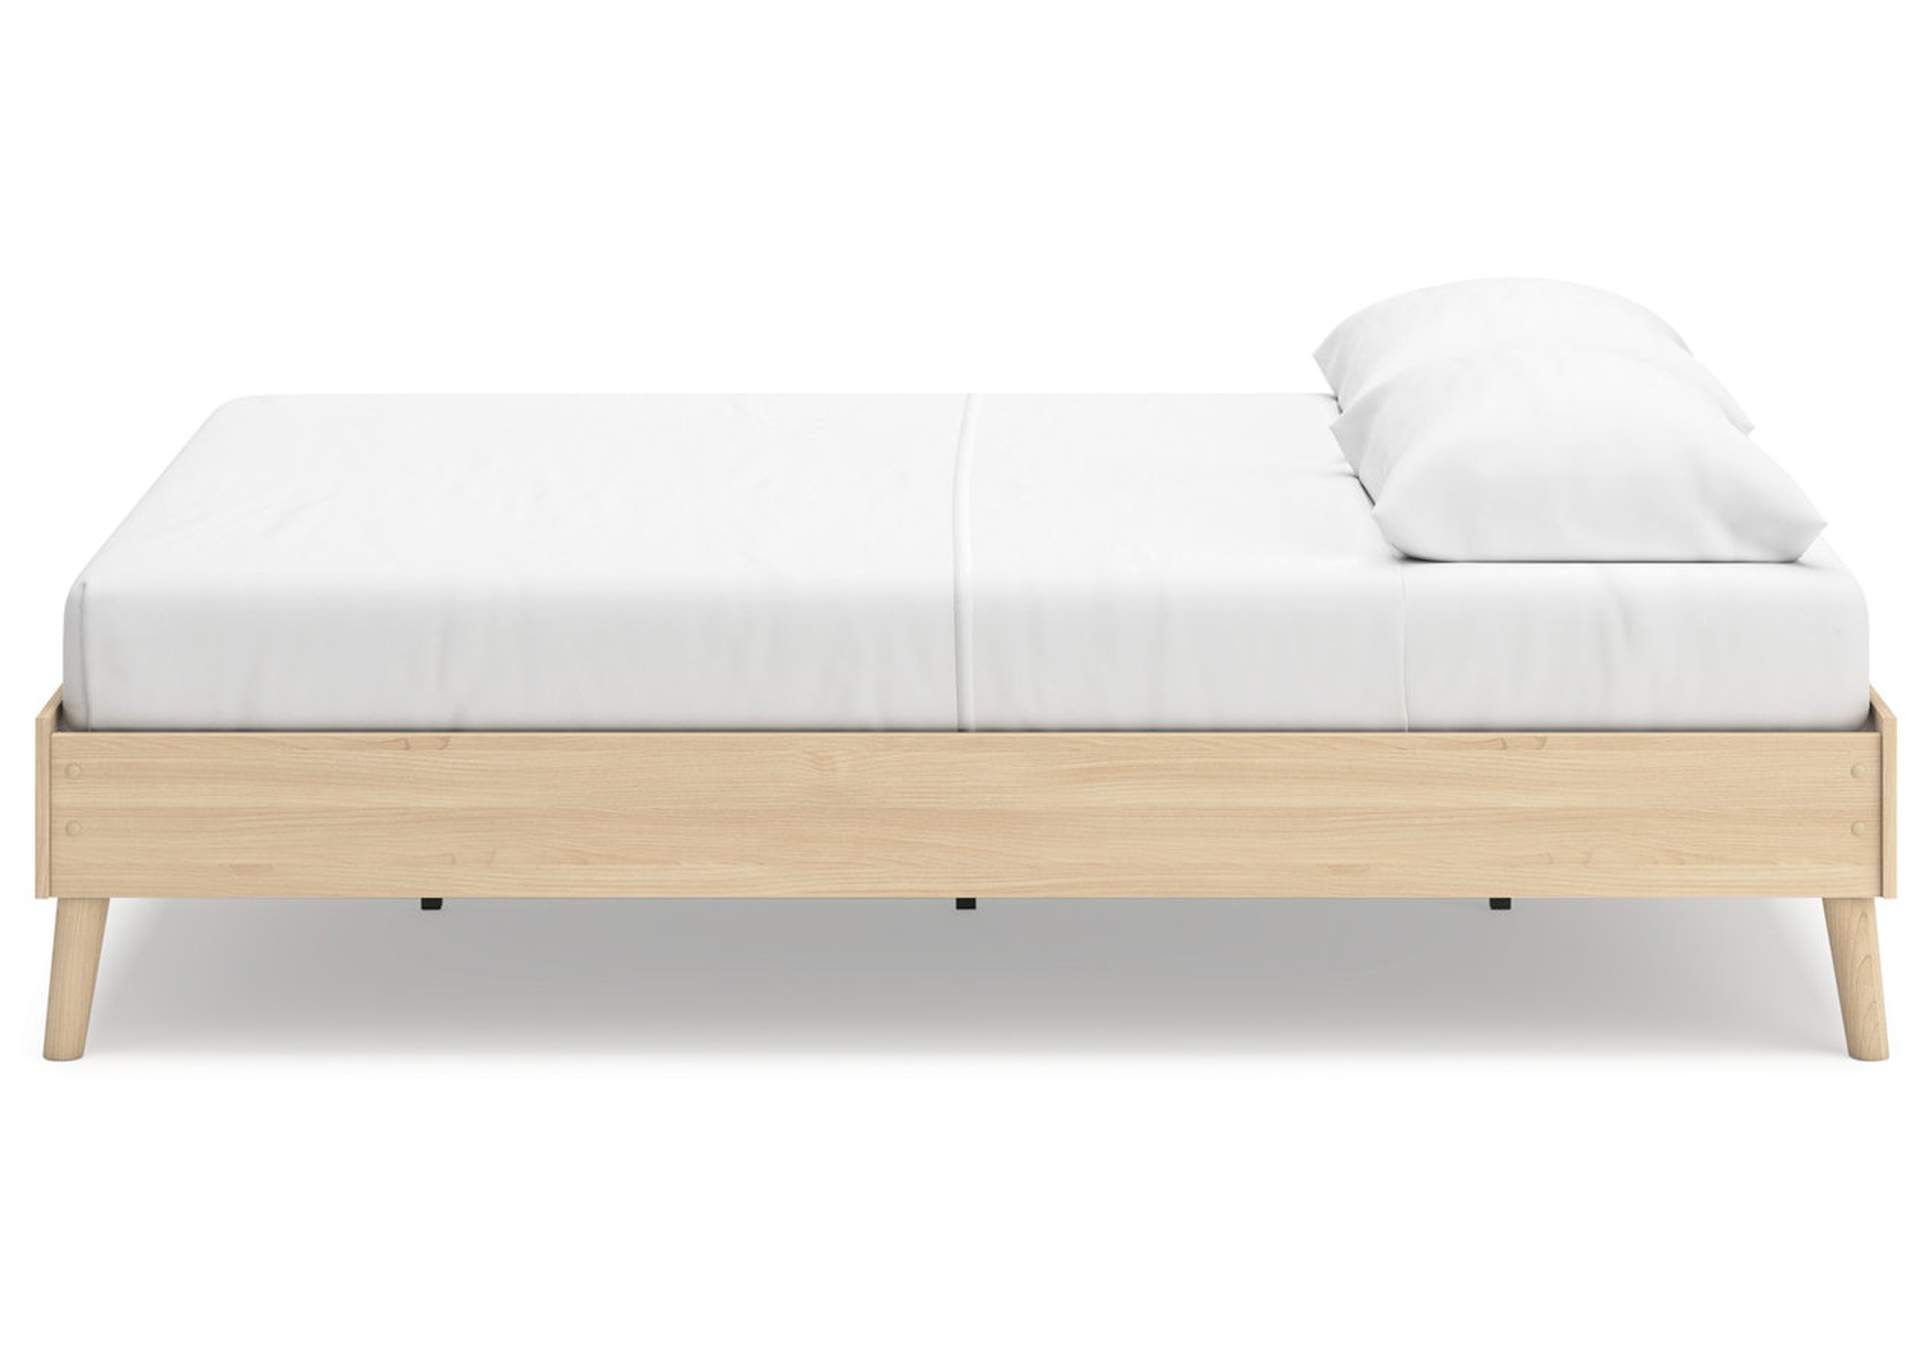 Cabinella Queen Platform Bed,Signature Design By Ashley